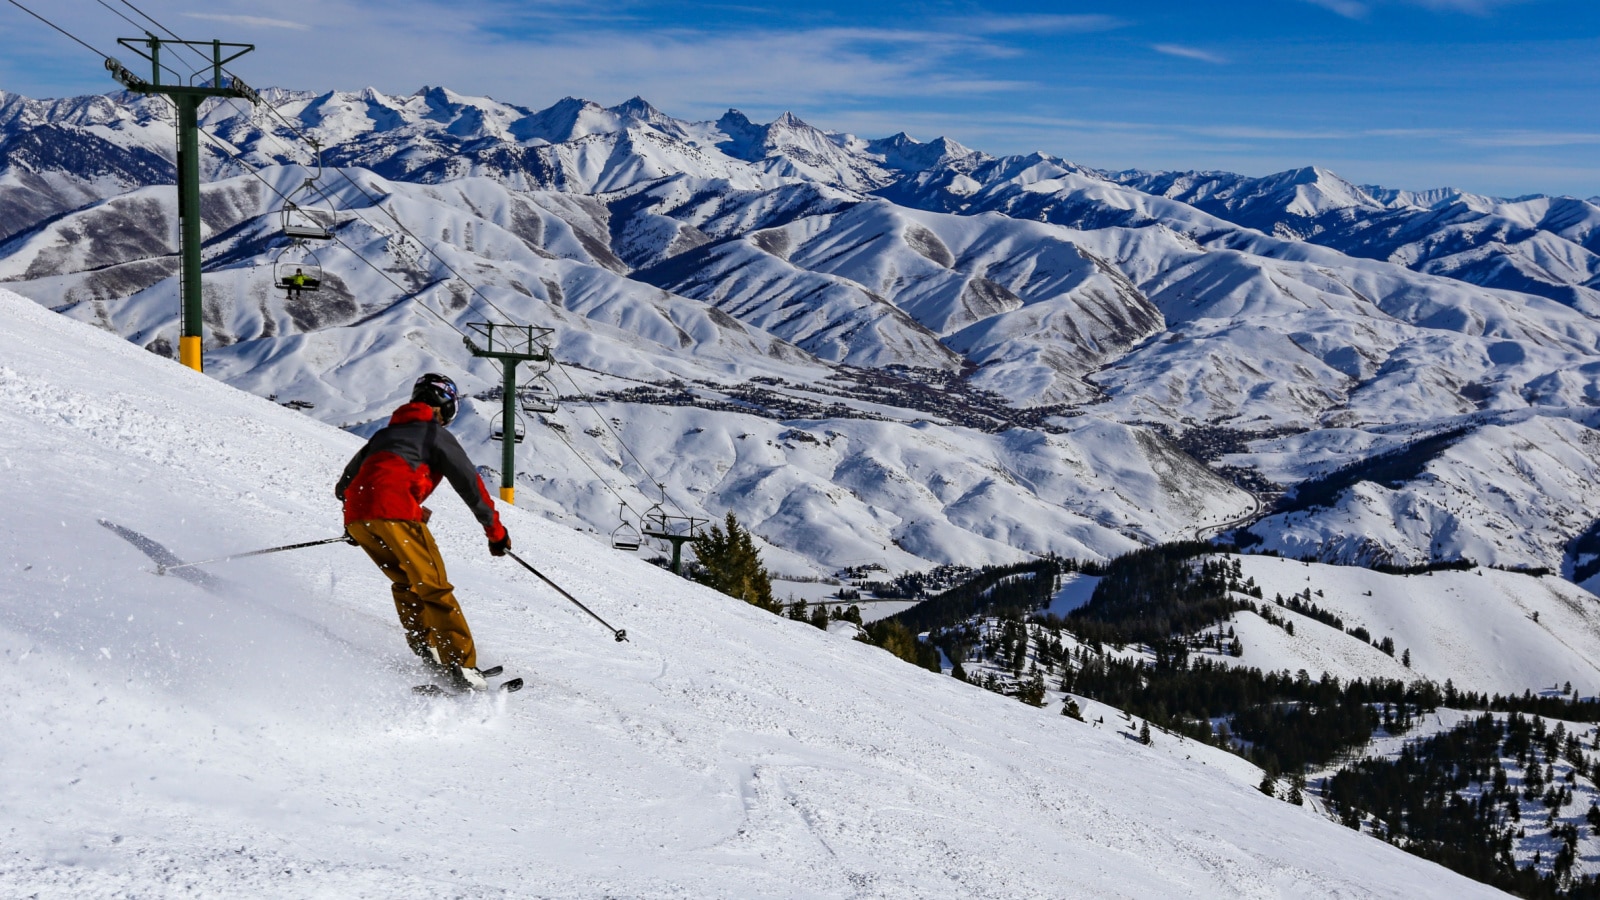 Downhill skiing in Sun Valley, Idaho